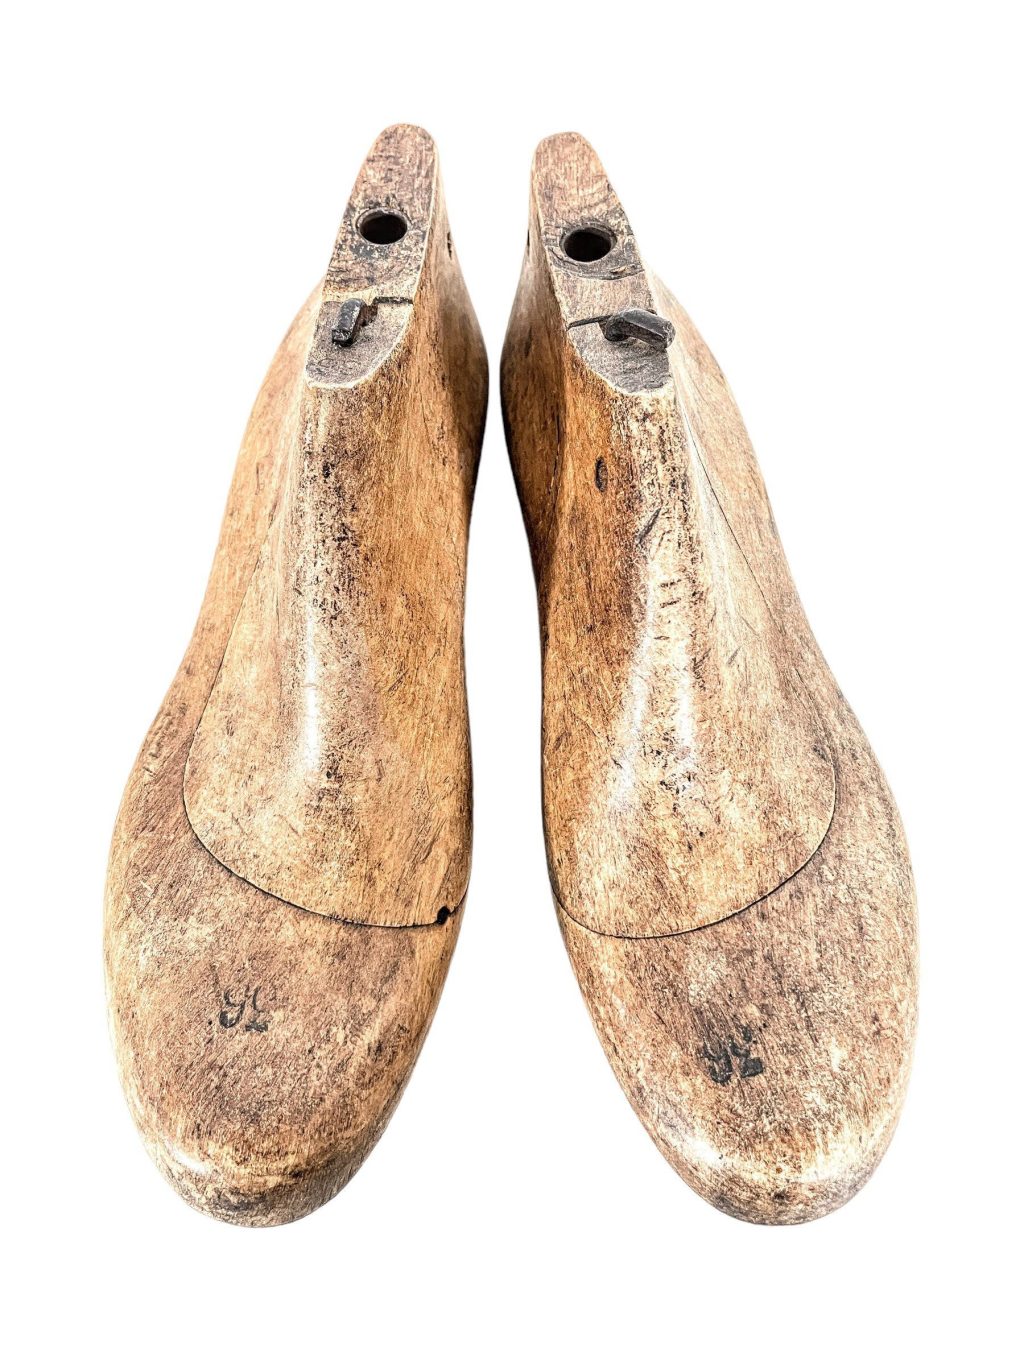 Vintage French Wooden Wood Shoe Shoes Last Form Forms Cobbler Shoe Maker Foot Size 36 Ornament Display Decor c1940-50’s